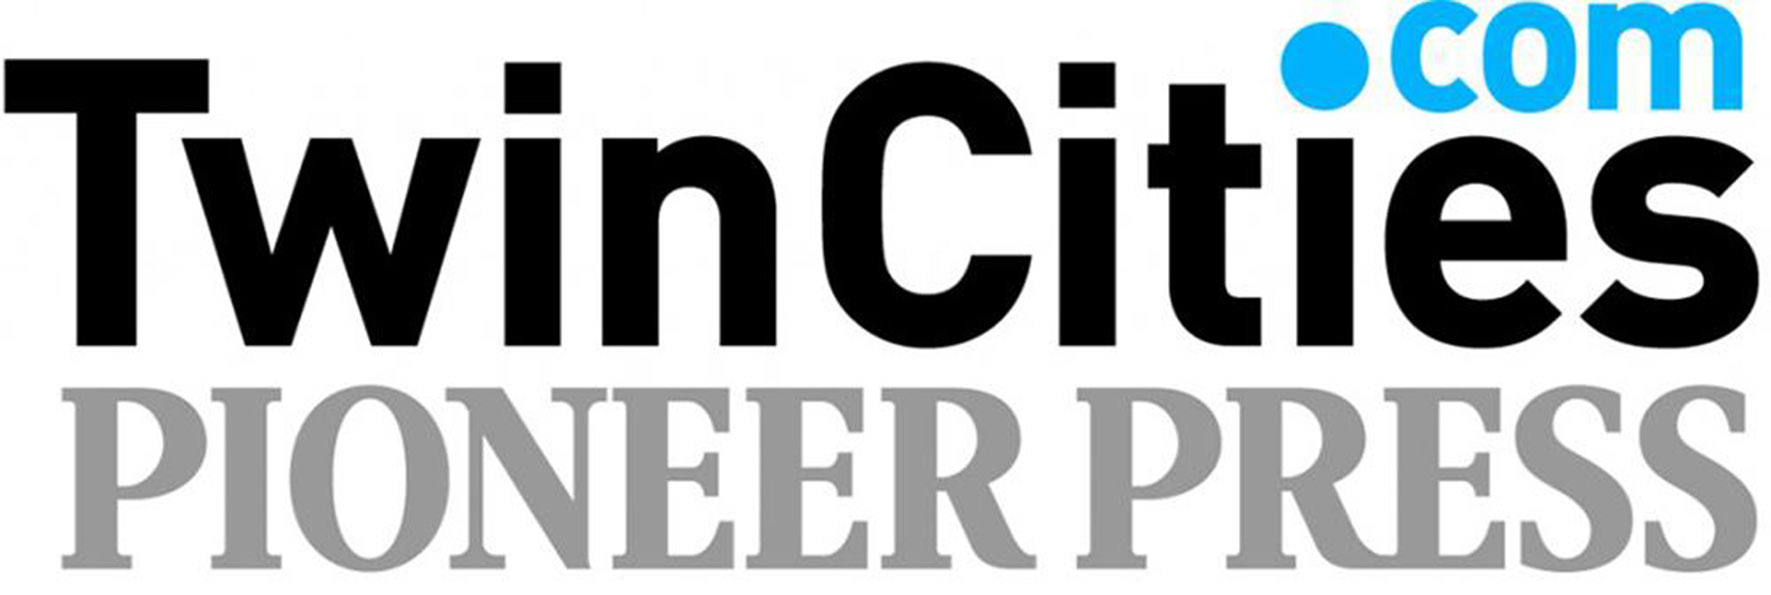 Twin Cities Pioneer Press Logo
                  